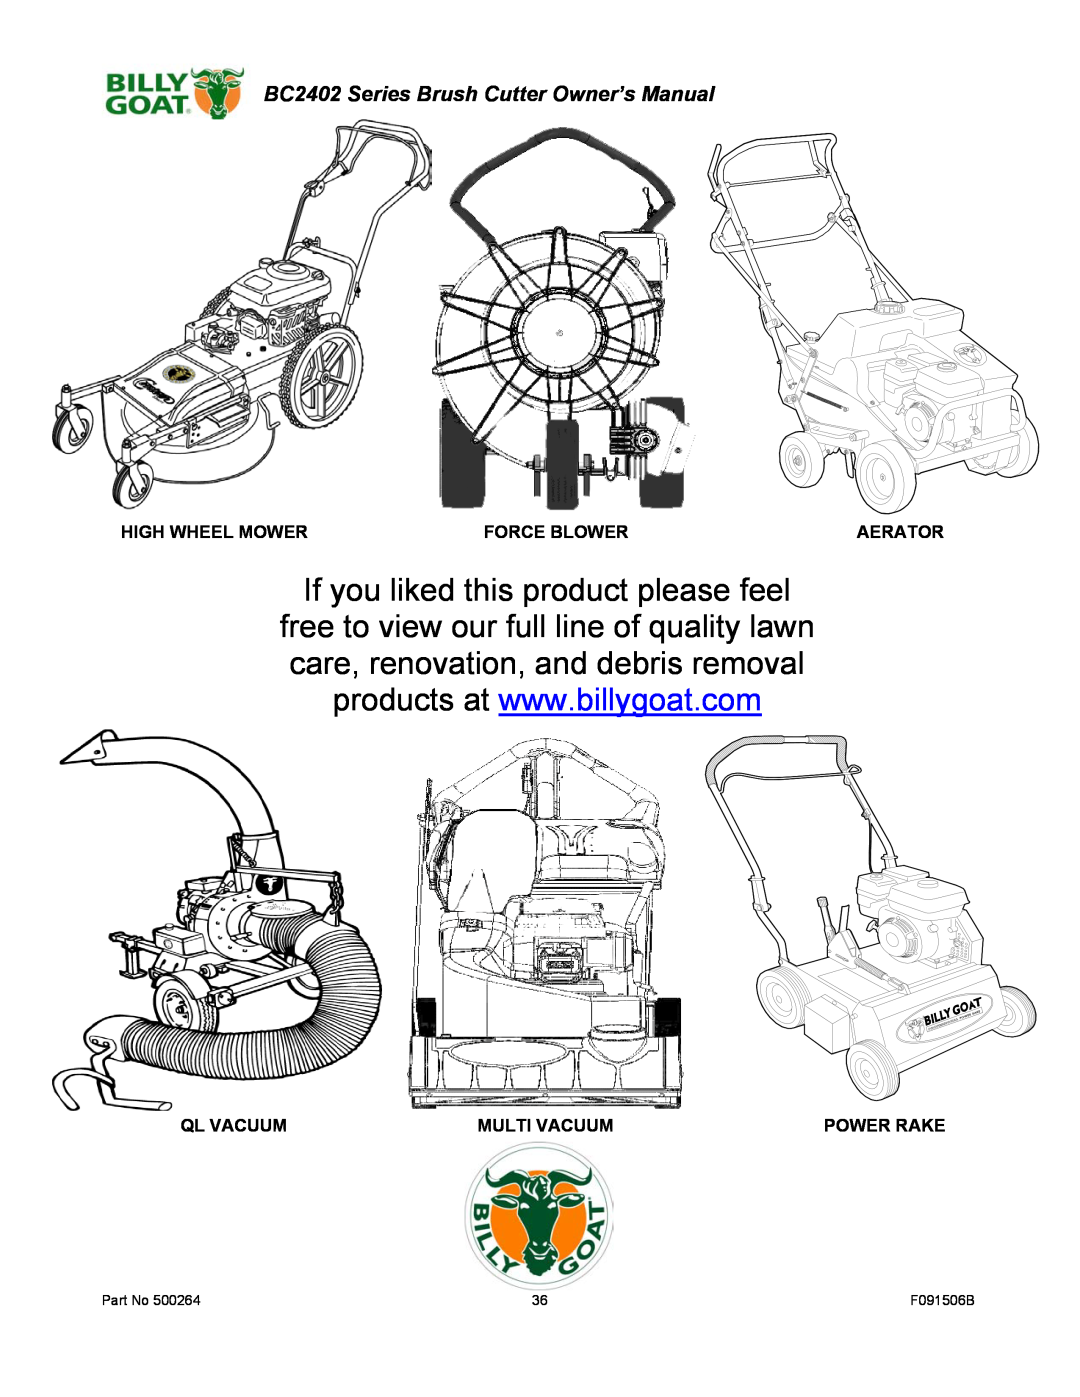 Billy Goat BC2402 owner manual High Wheel Mower, Force Blower, Aerator, Ql Vacuum, Multi Vacuum, Power Rake 